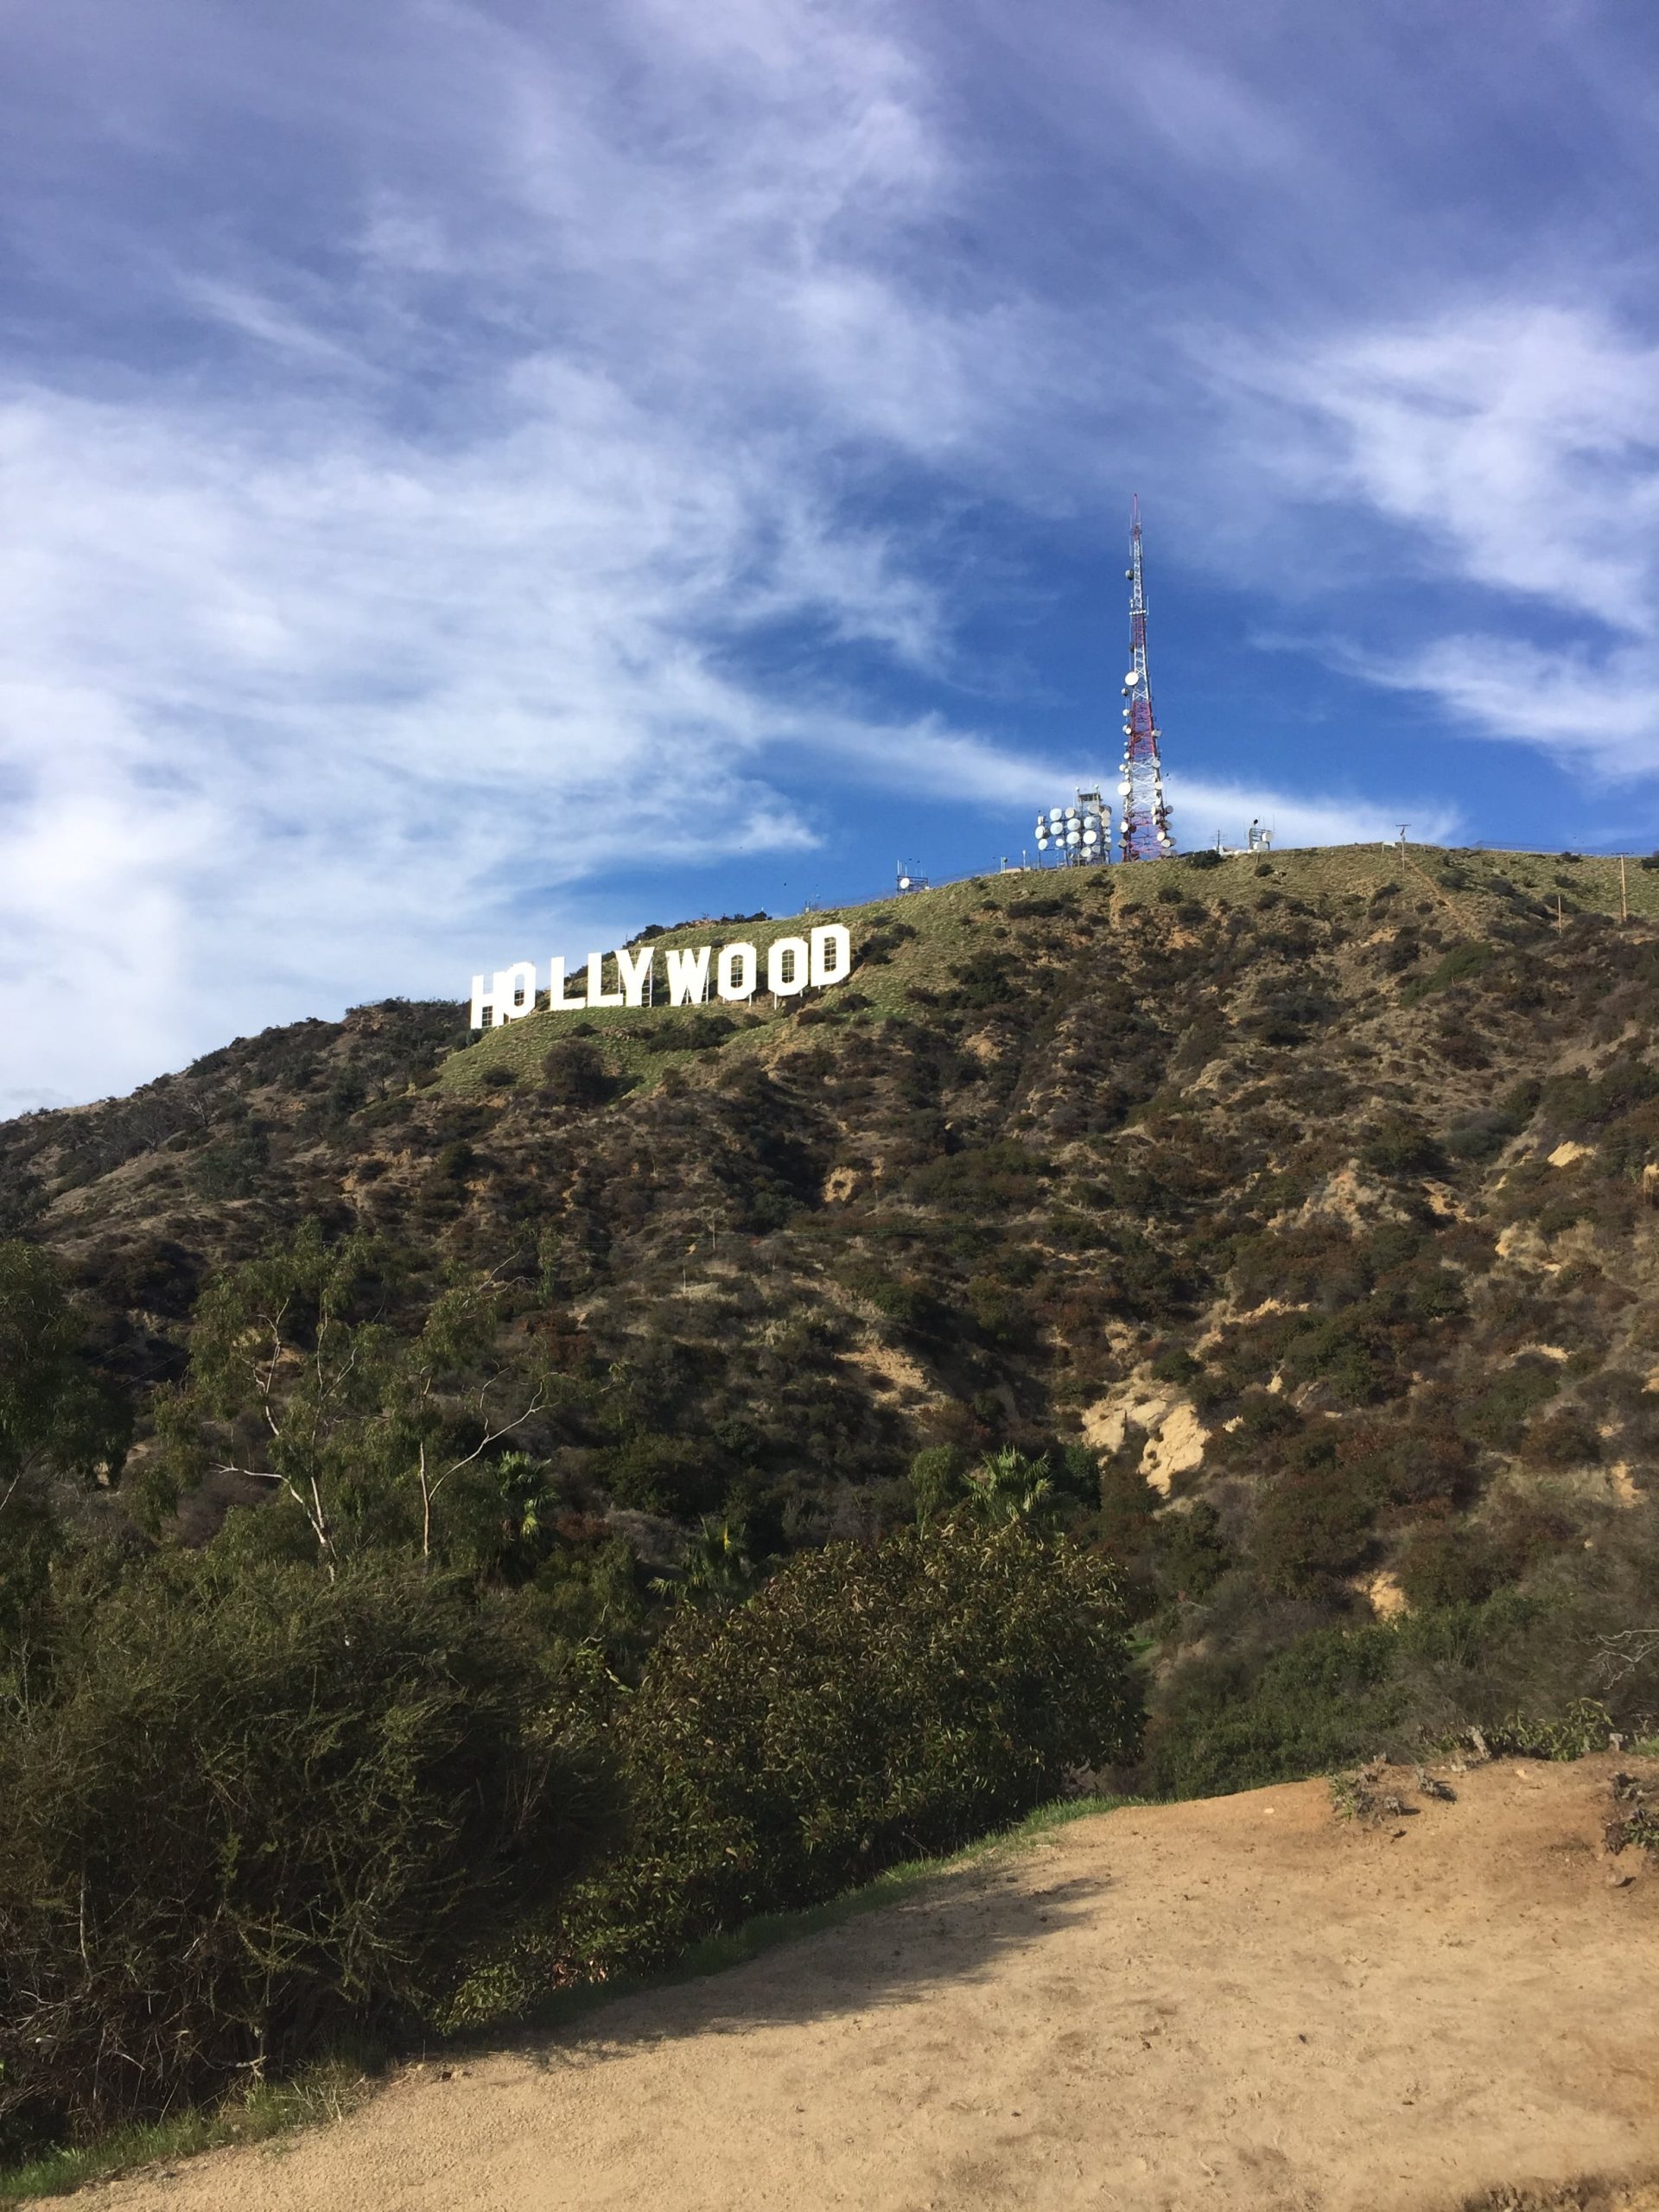 Hollywood nápis uprostred lesa.